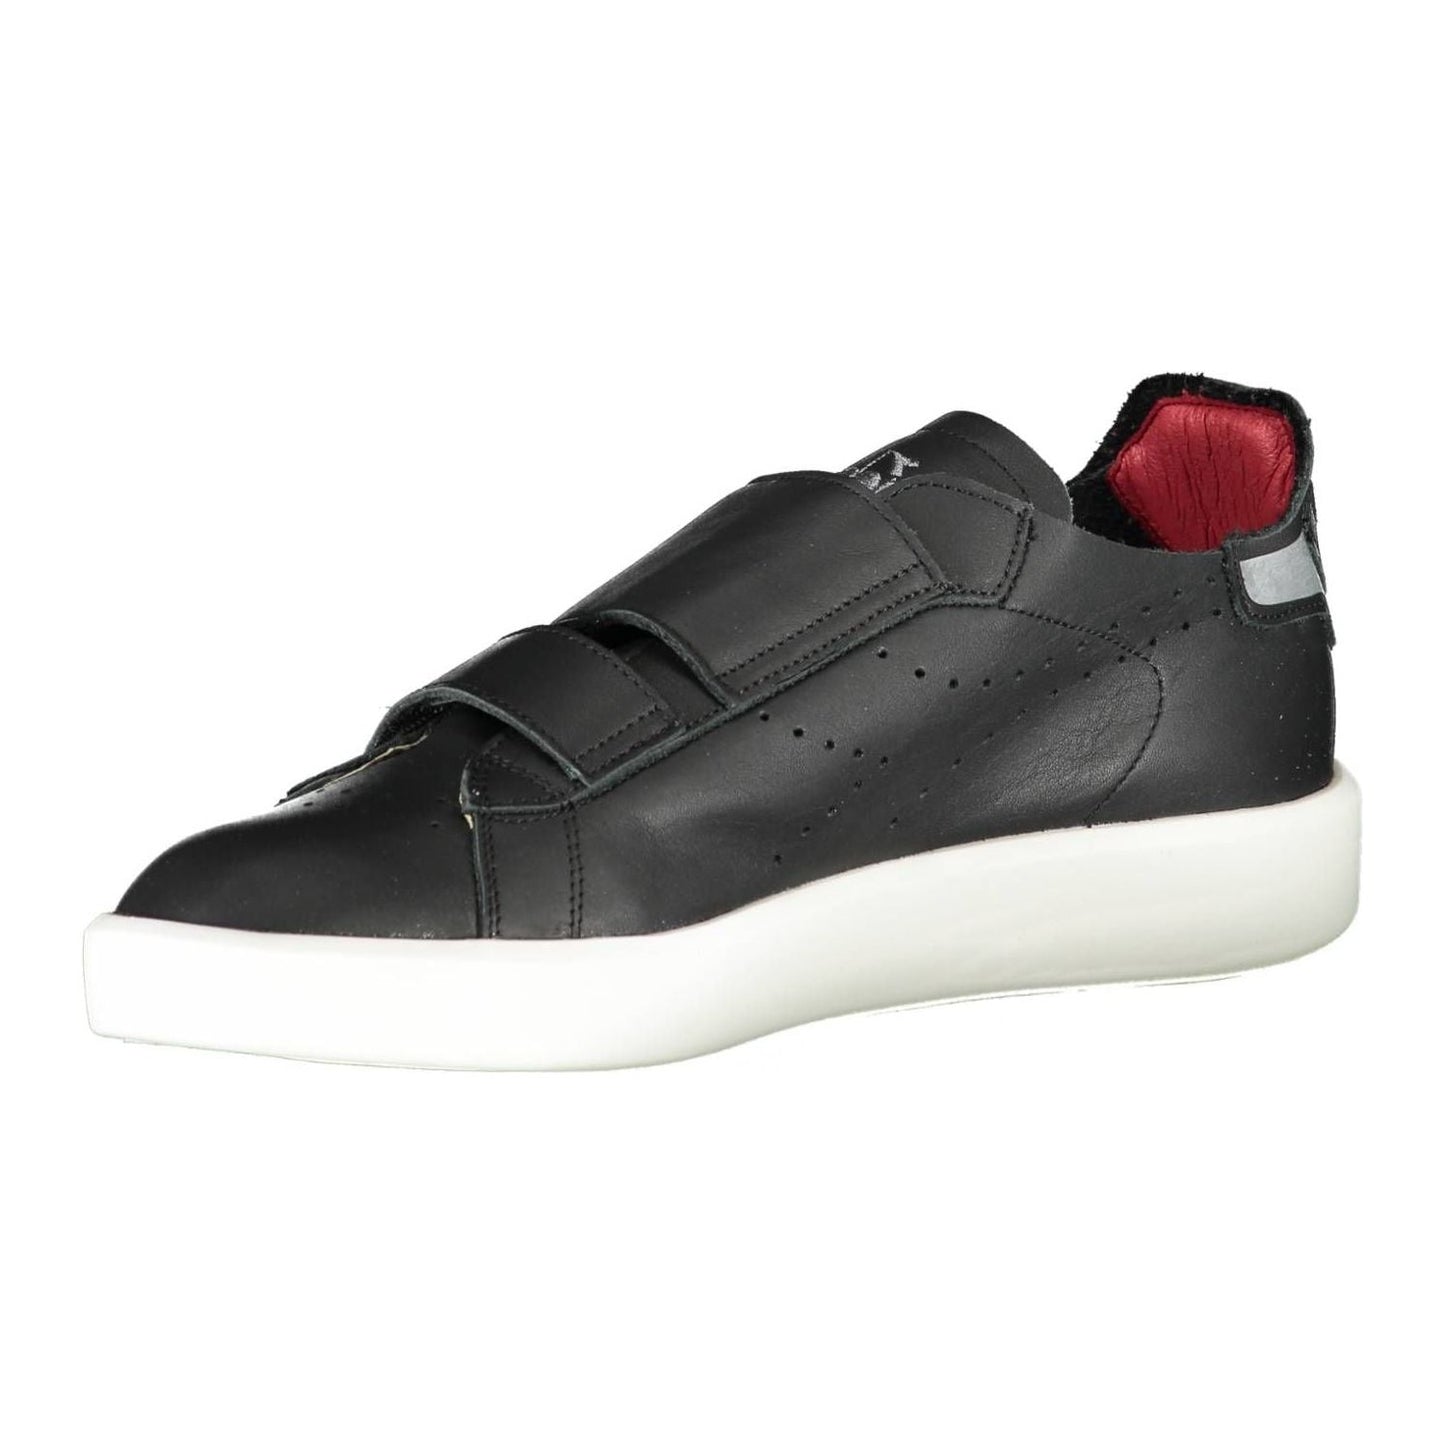 Diadora Sleek Black Leather Sneakers with Contrast Details sleek-black-leather-sneakers-with-contrast-details